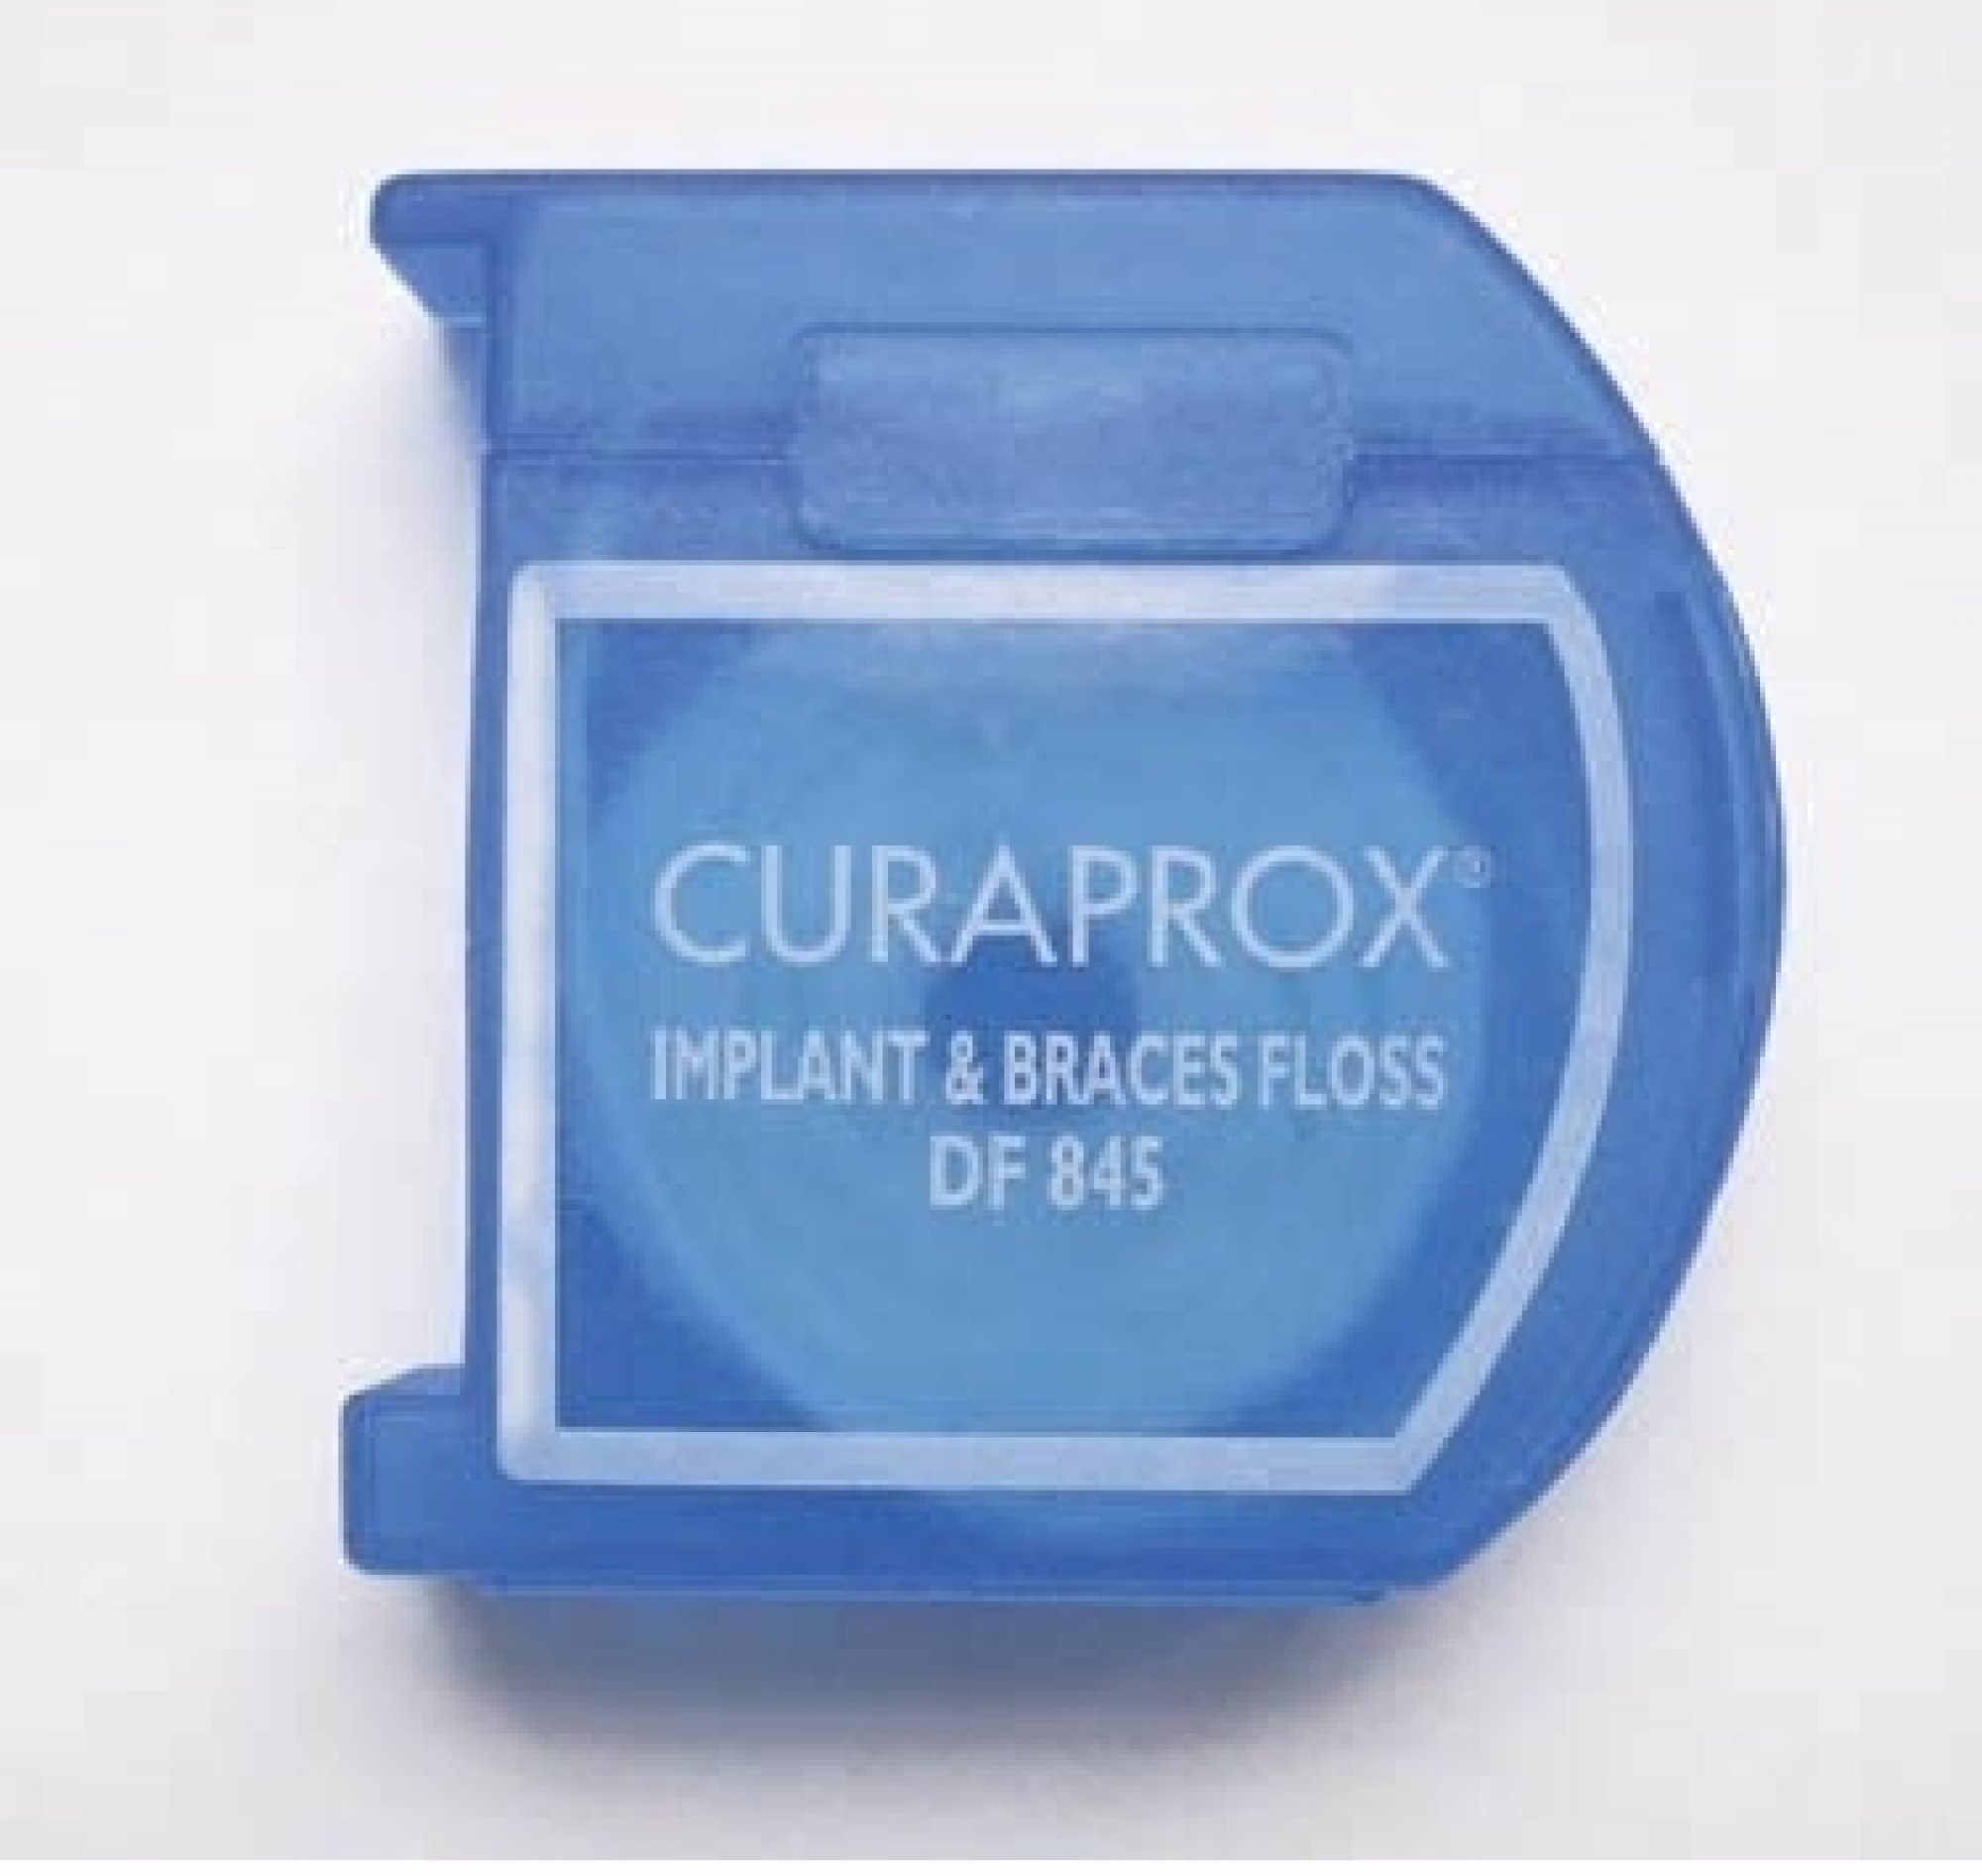 CURAPROX DF 845 Implant & Braces